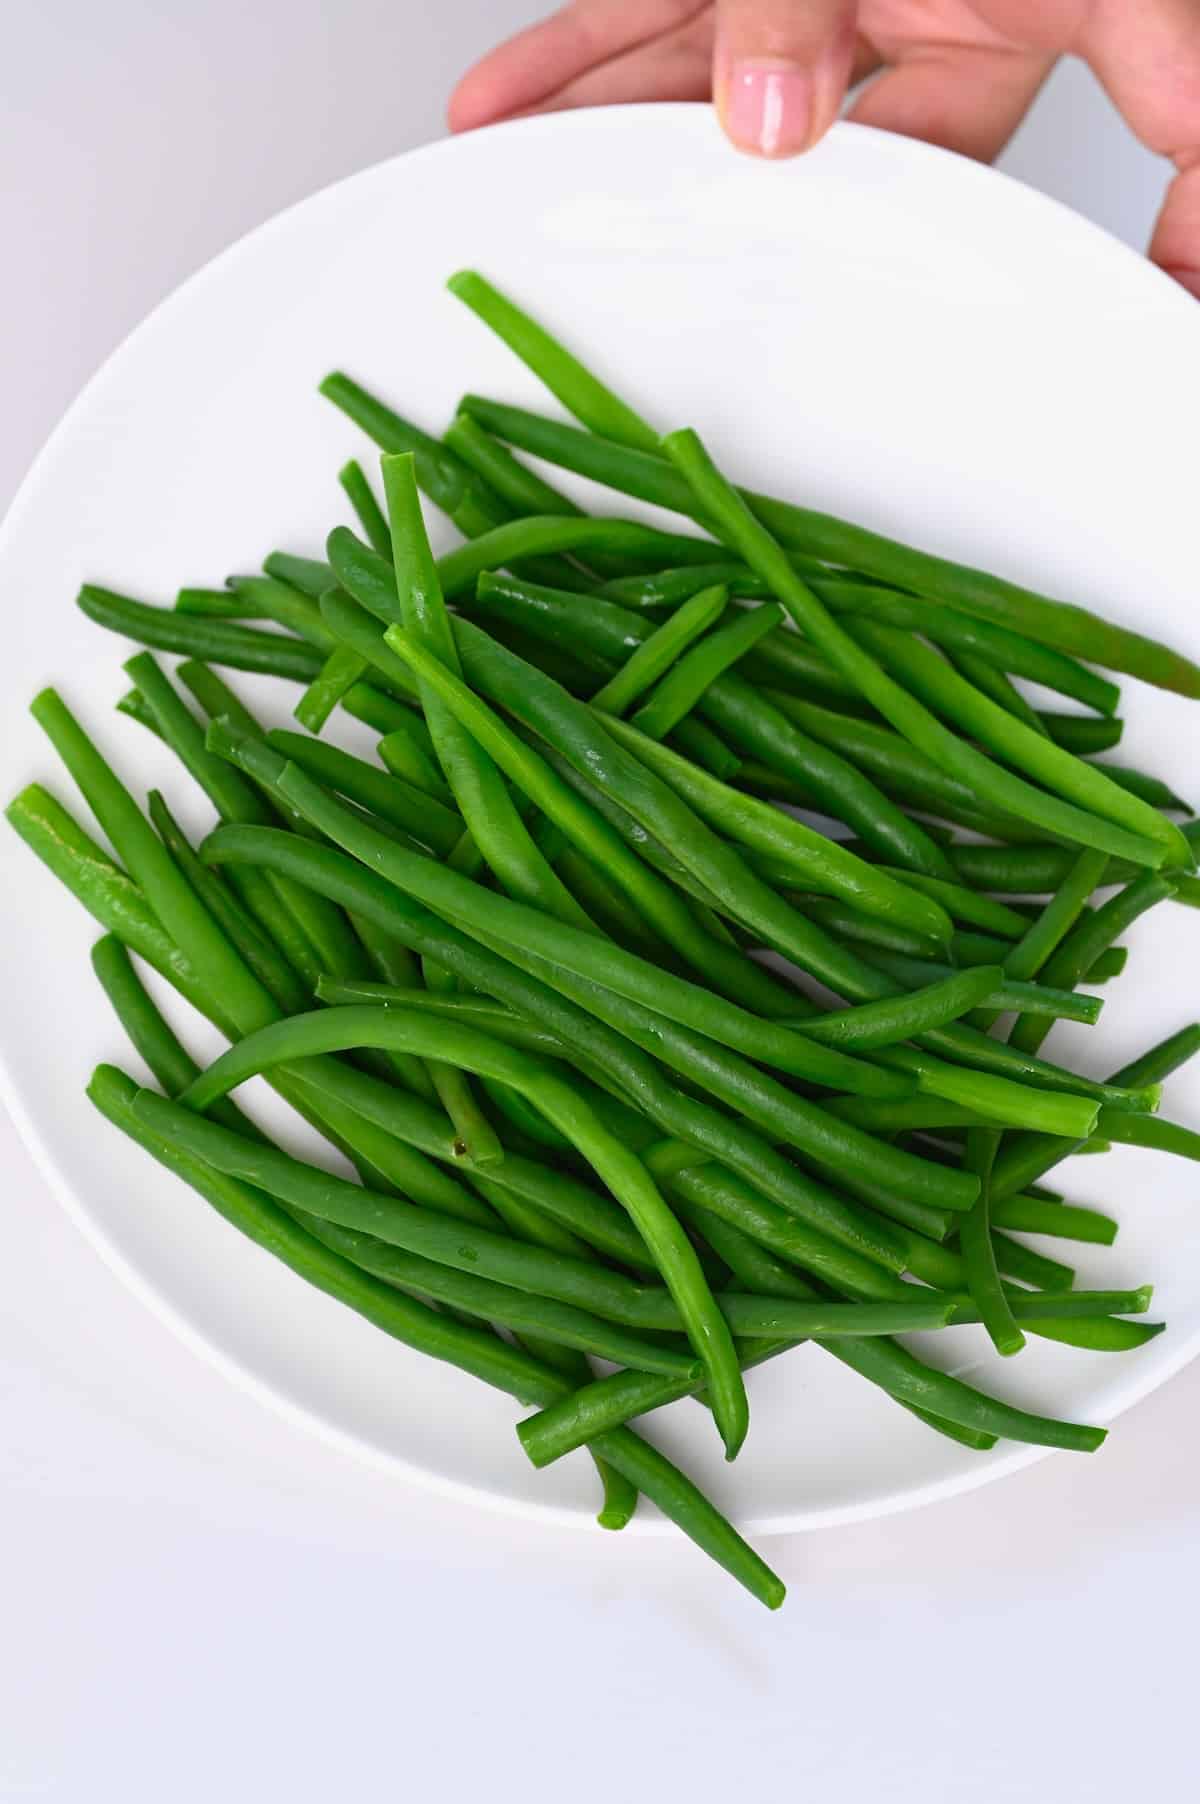 Freshly boiled green beans on a white plate